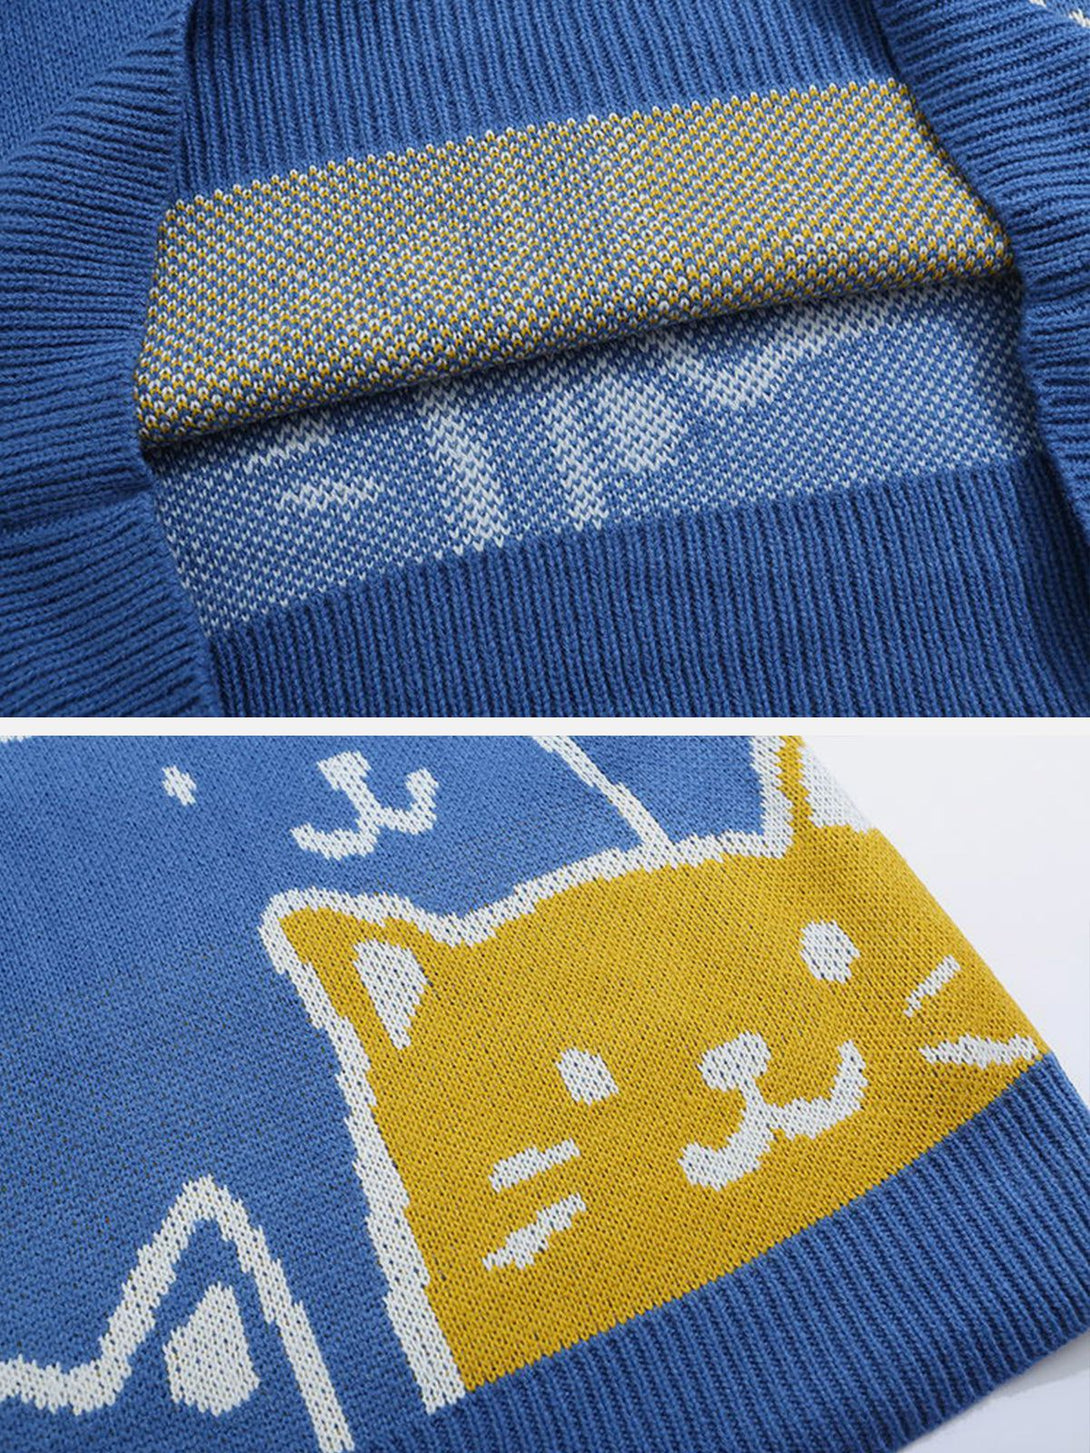 AlanBalen® - Cartoon Cat Pattern Knit Sweater AlanBalen